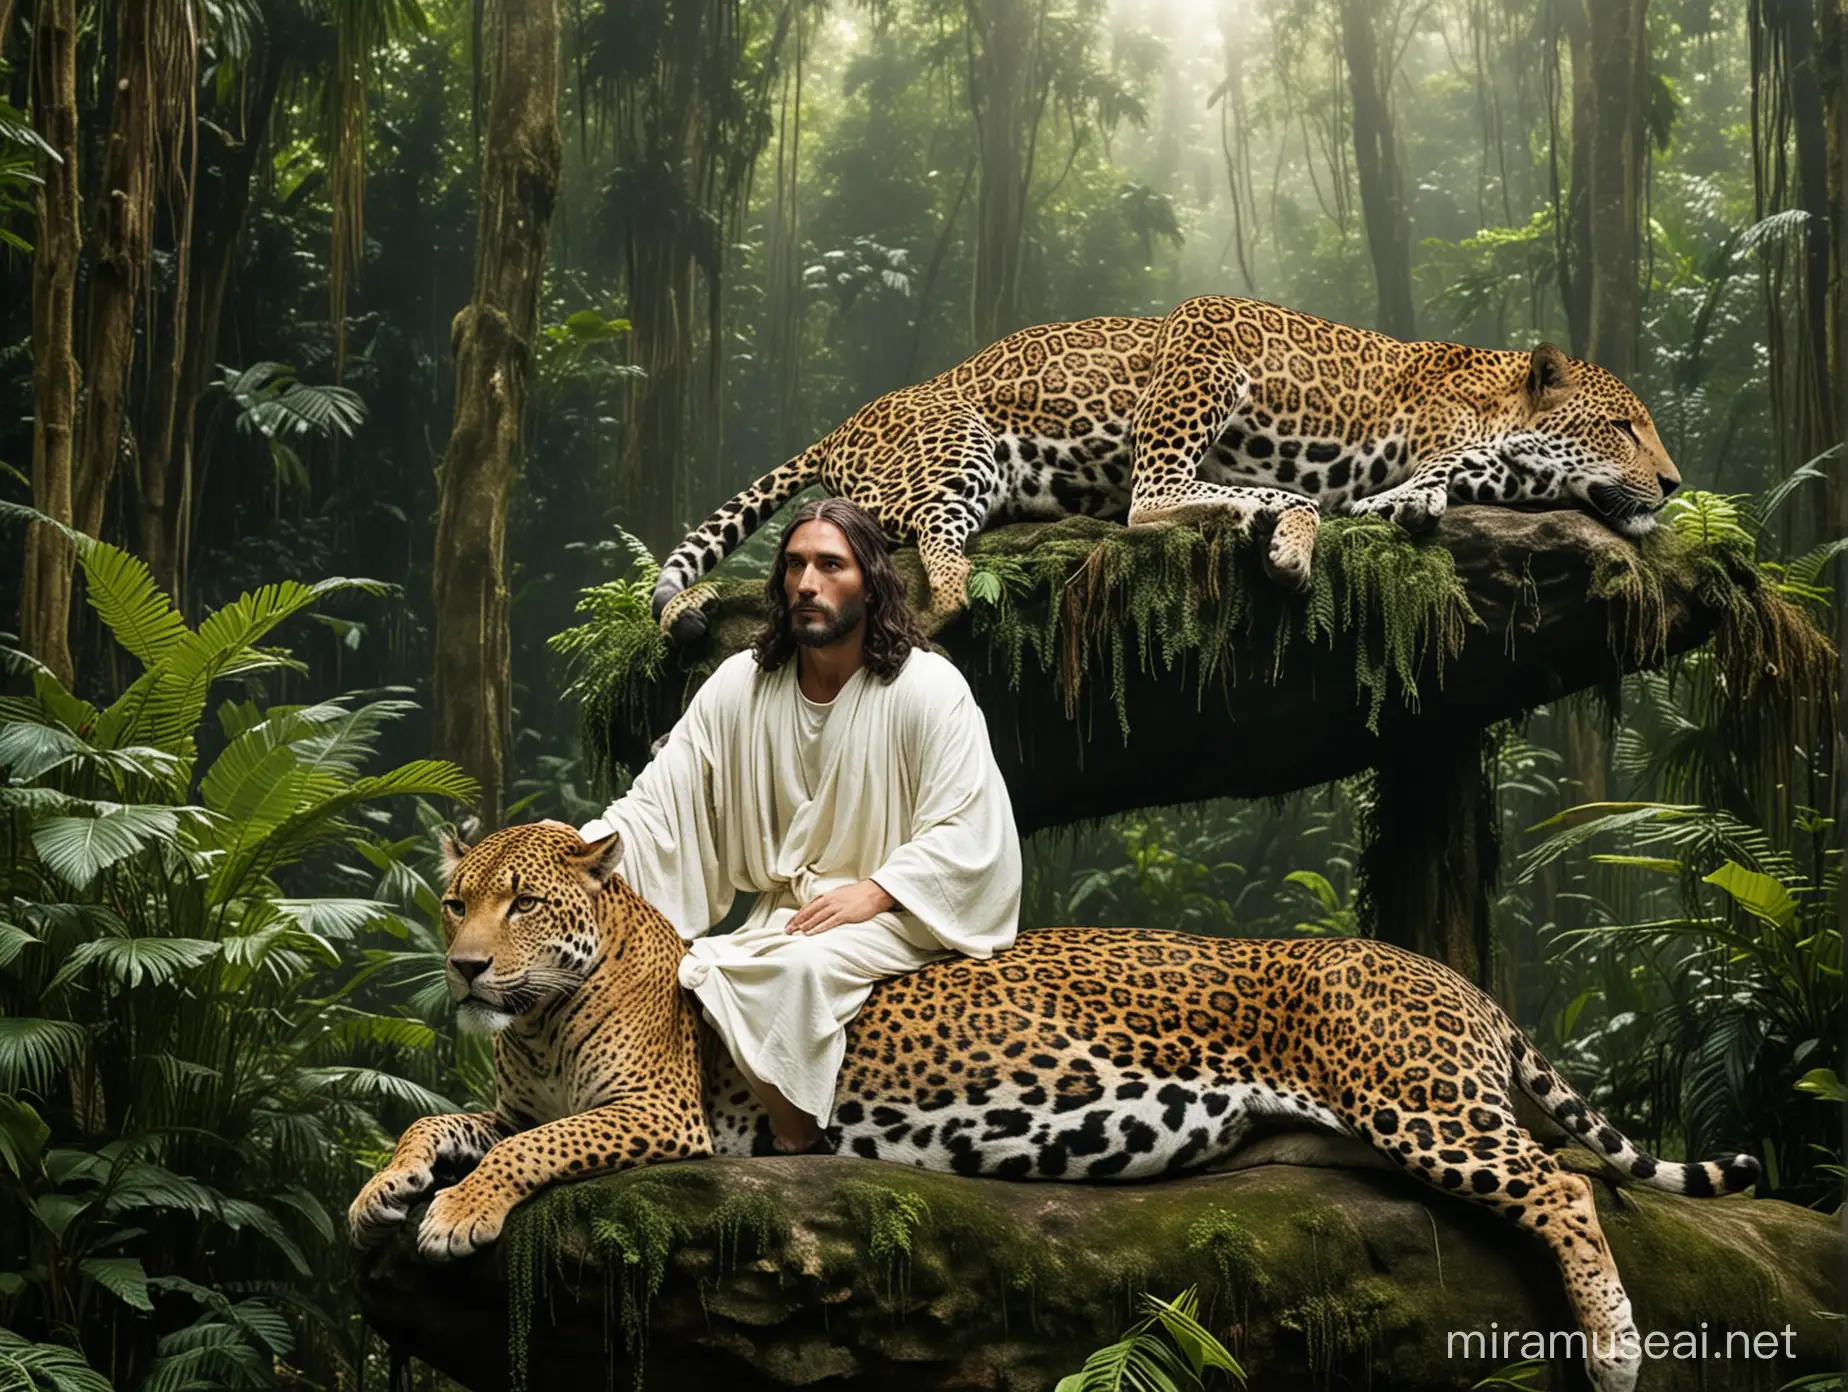 Divine Encounter Jesus Christ Seated on a Jaguar in the Enchanting Rainforest